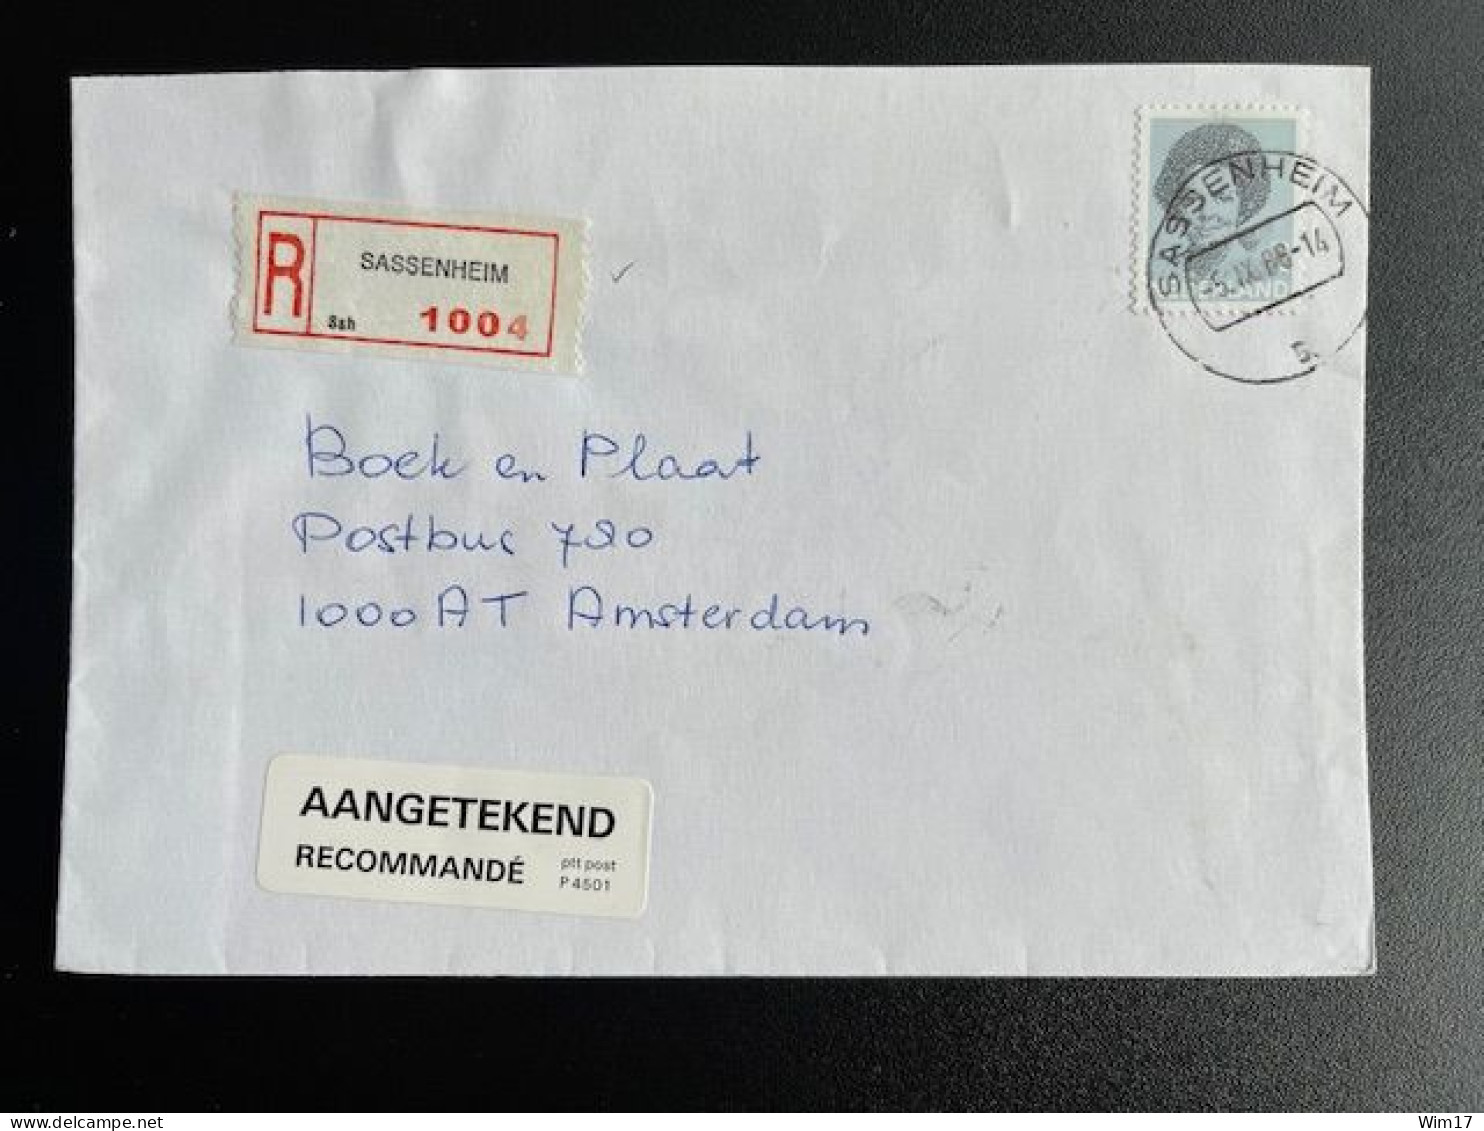 NETHERLANDS 1988 REGISTERED LETTER SASSENHEIM TO AMSTERDAM 05-09-1988 NEDERLAND AANGETEKEND - Covers & Documents